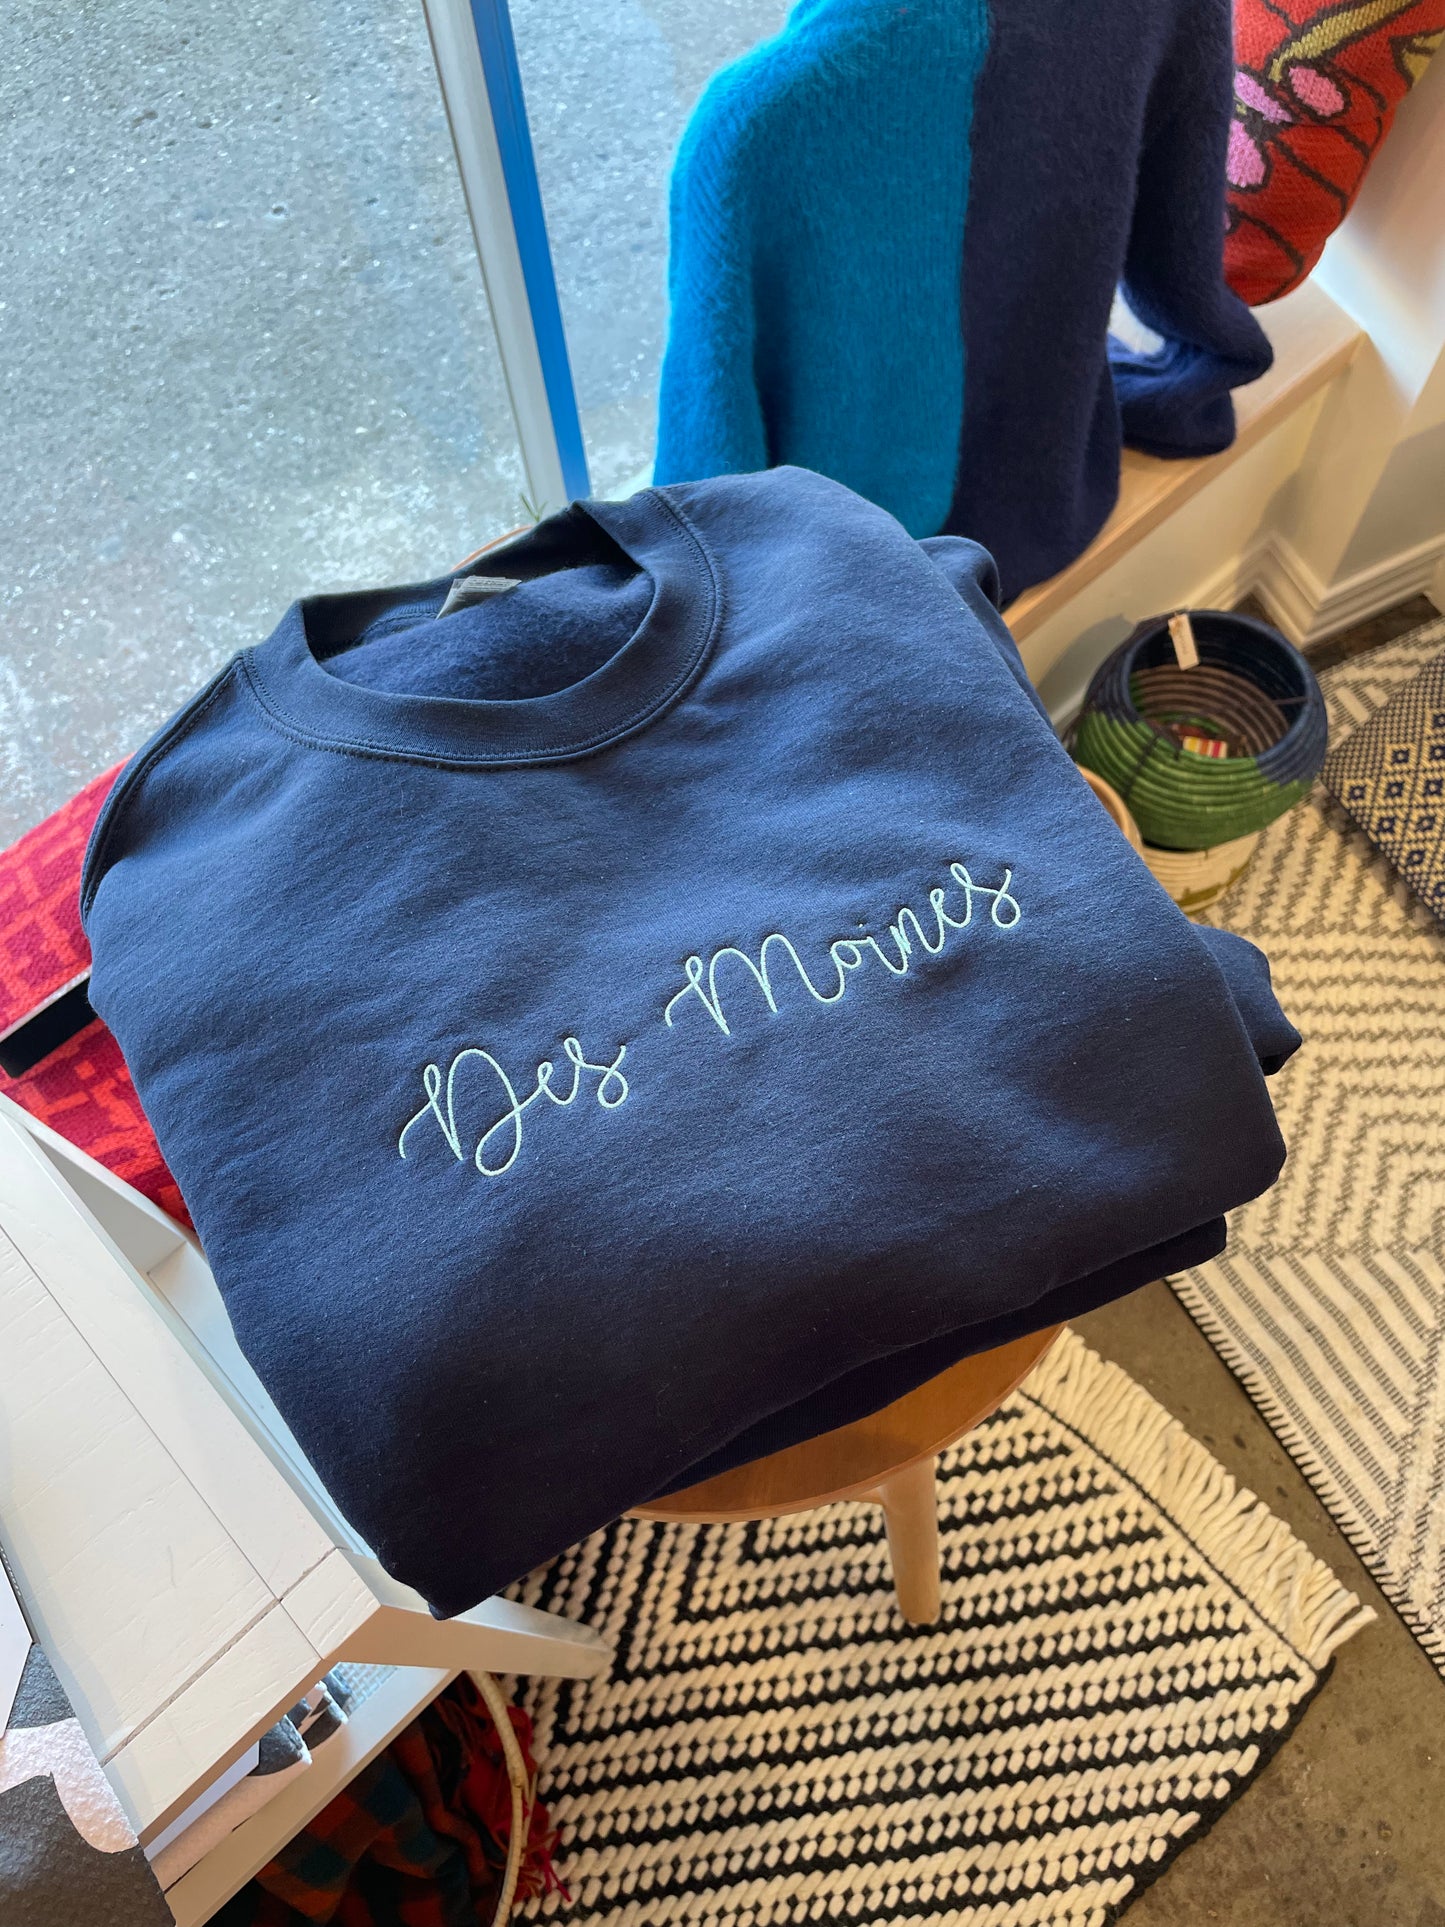 Des Moines embroidered sweatshirt